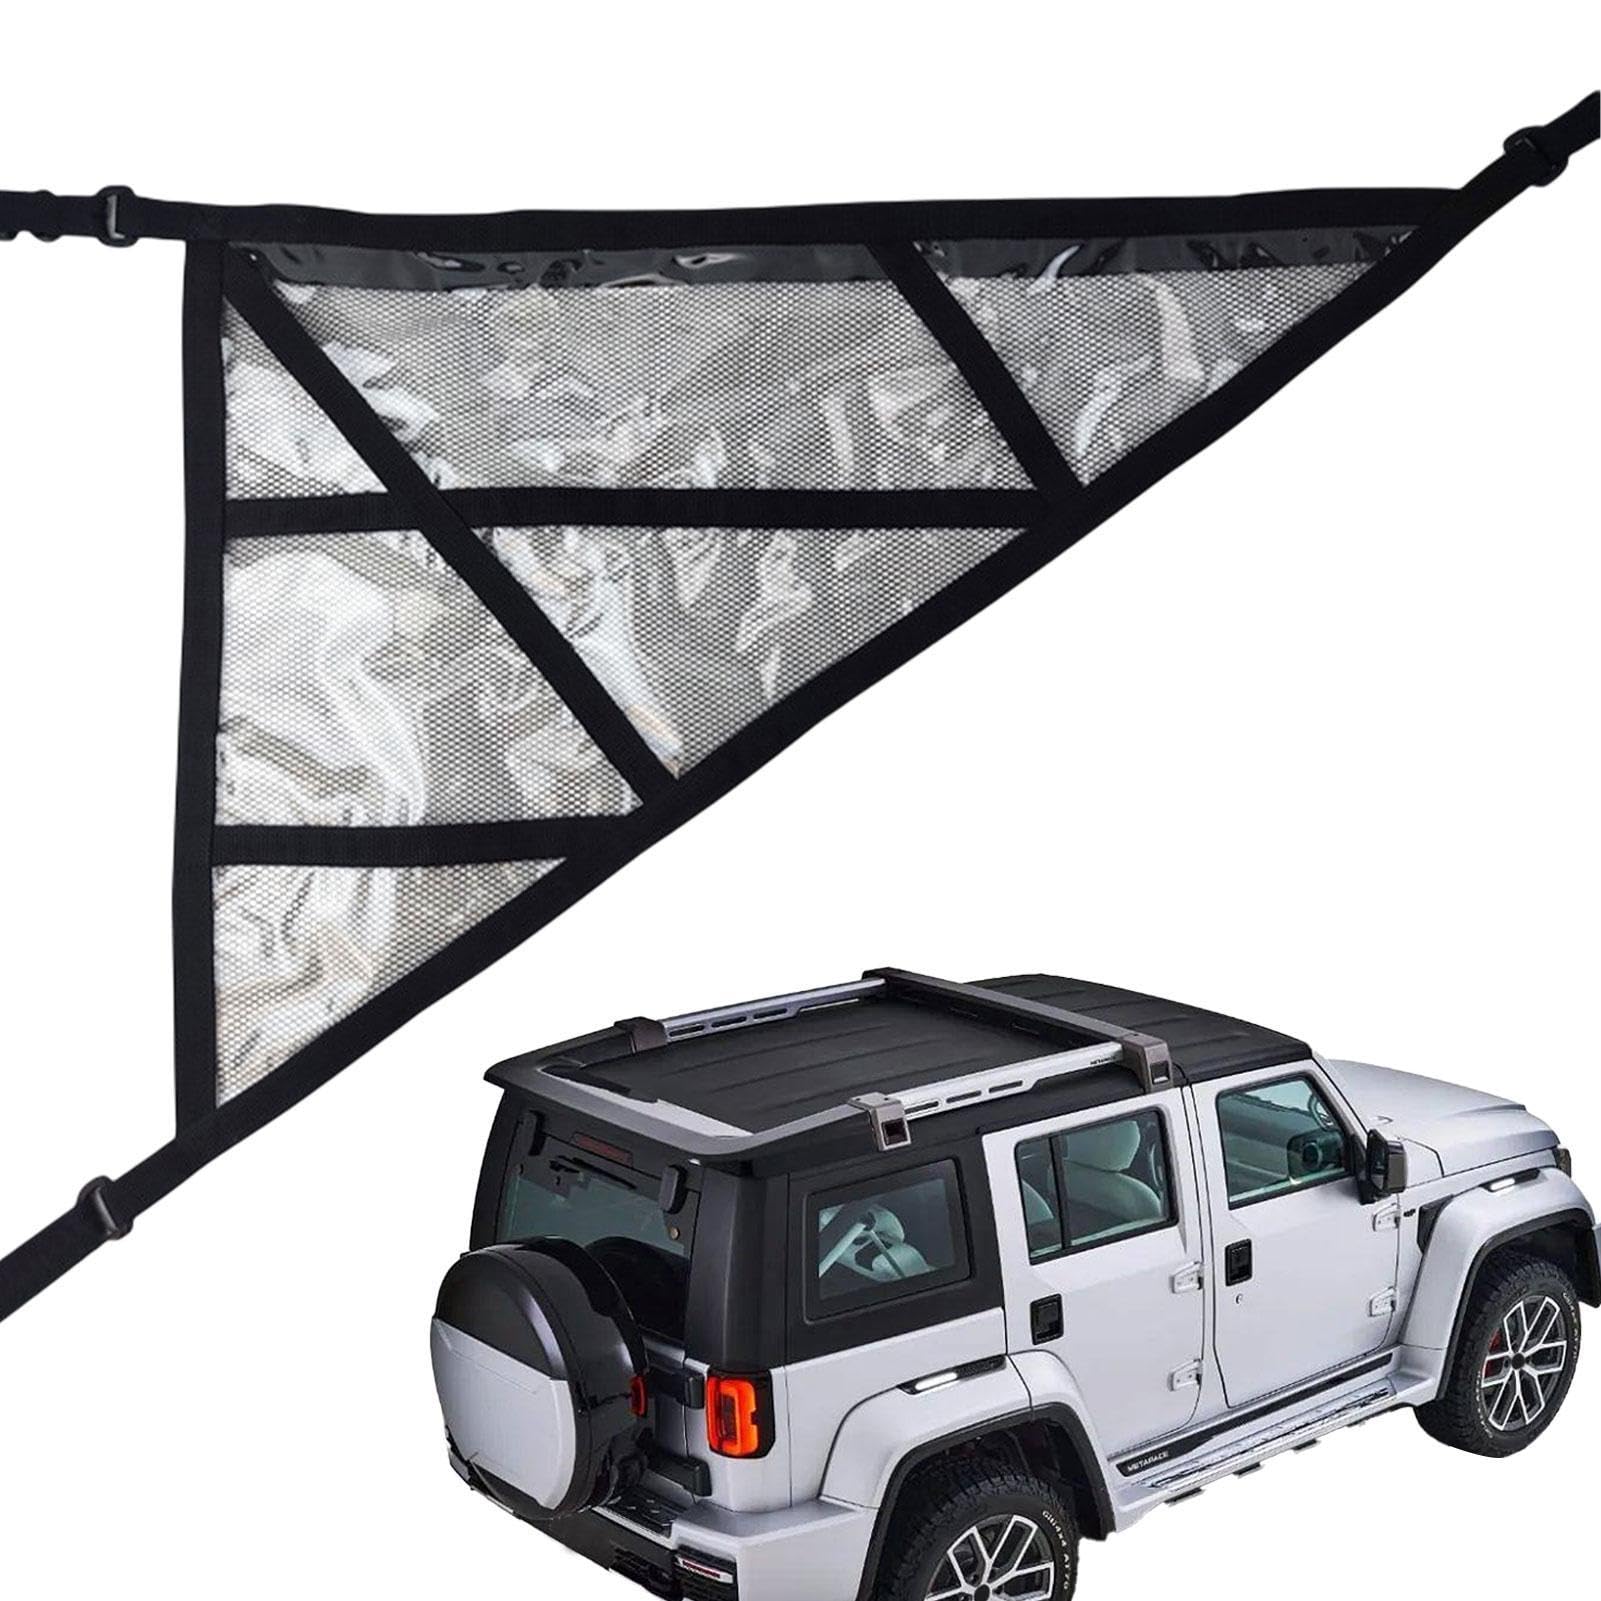 Carceiling Cargo Net | Triangle Car Ceiling Cargo Net Pocket | Adjustable Cross Strap Strengthen Load Car Ceiling Storage Net | Double Layer Mesh Car Organizer for Vehicles von Nbhuiakl